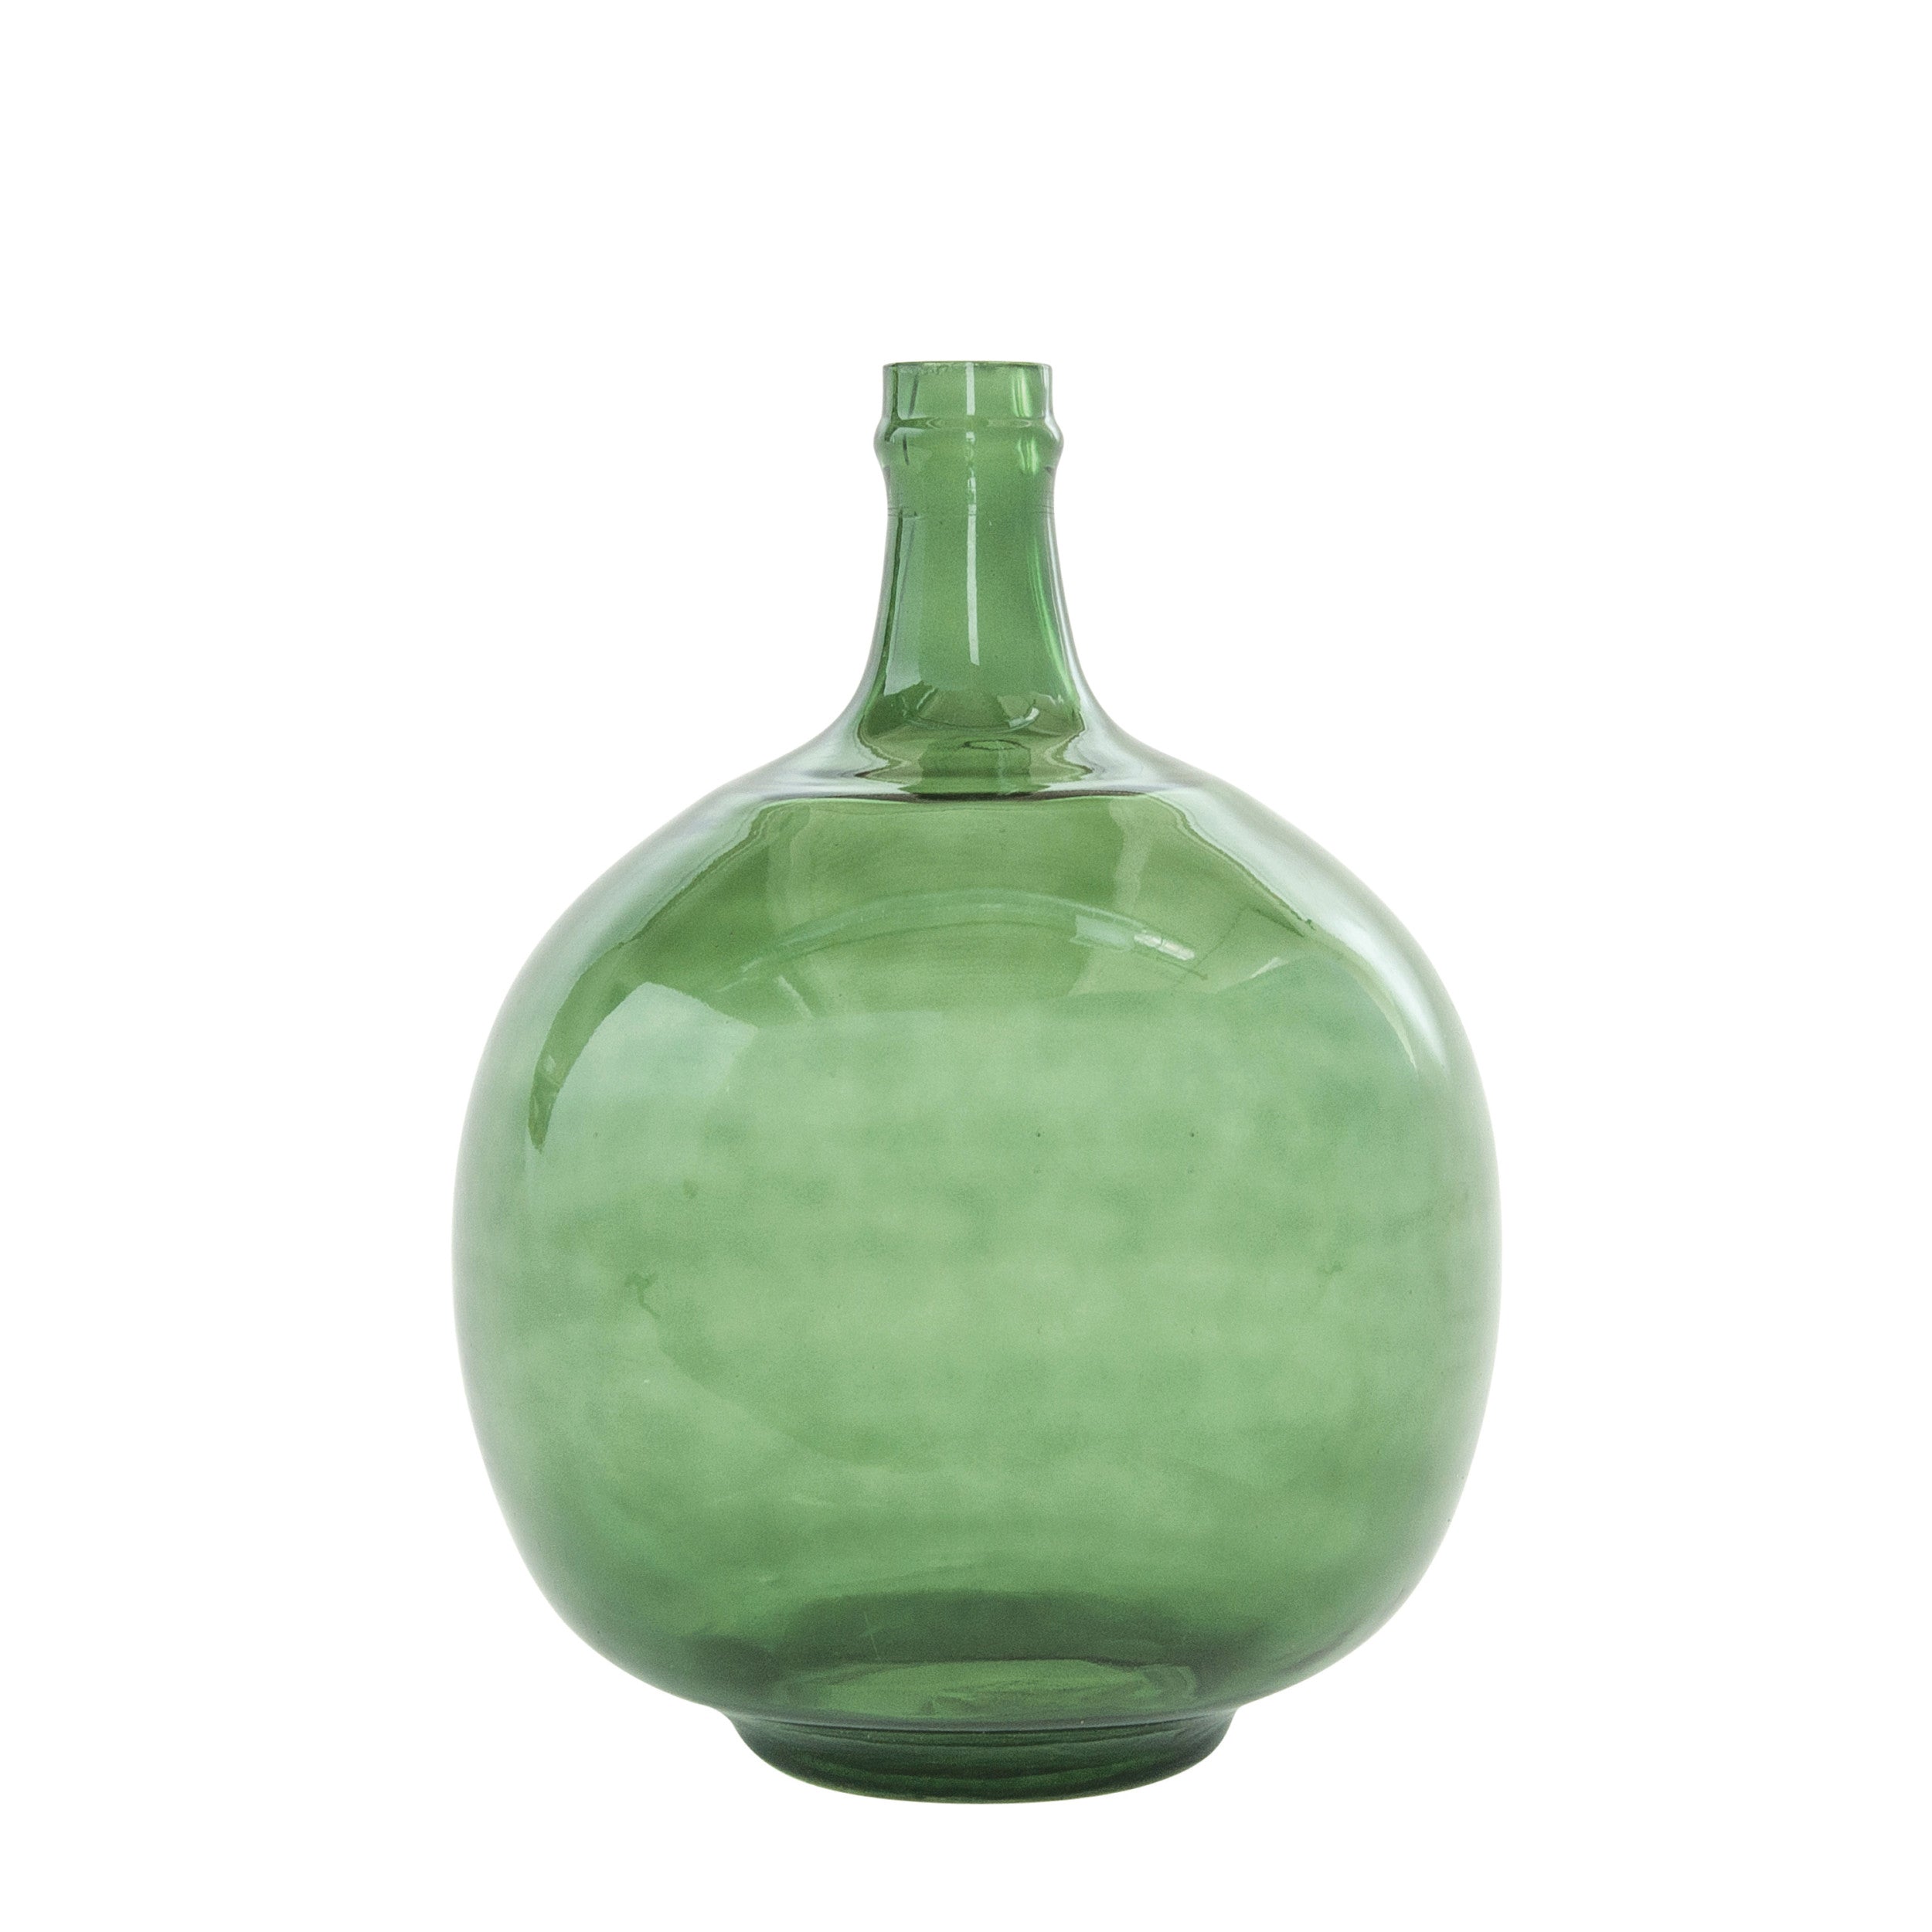 Round Green Glass Vintage-inspired Bottle